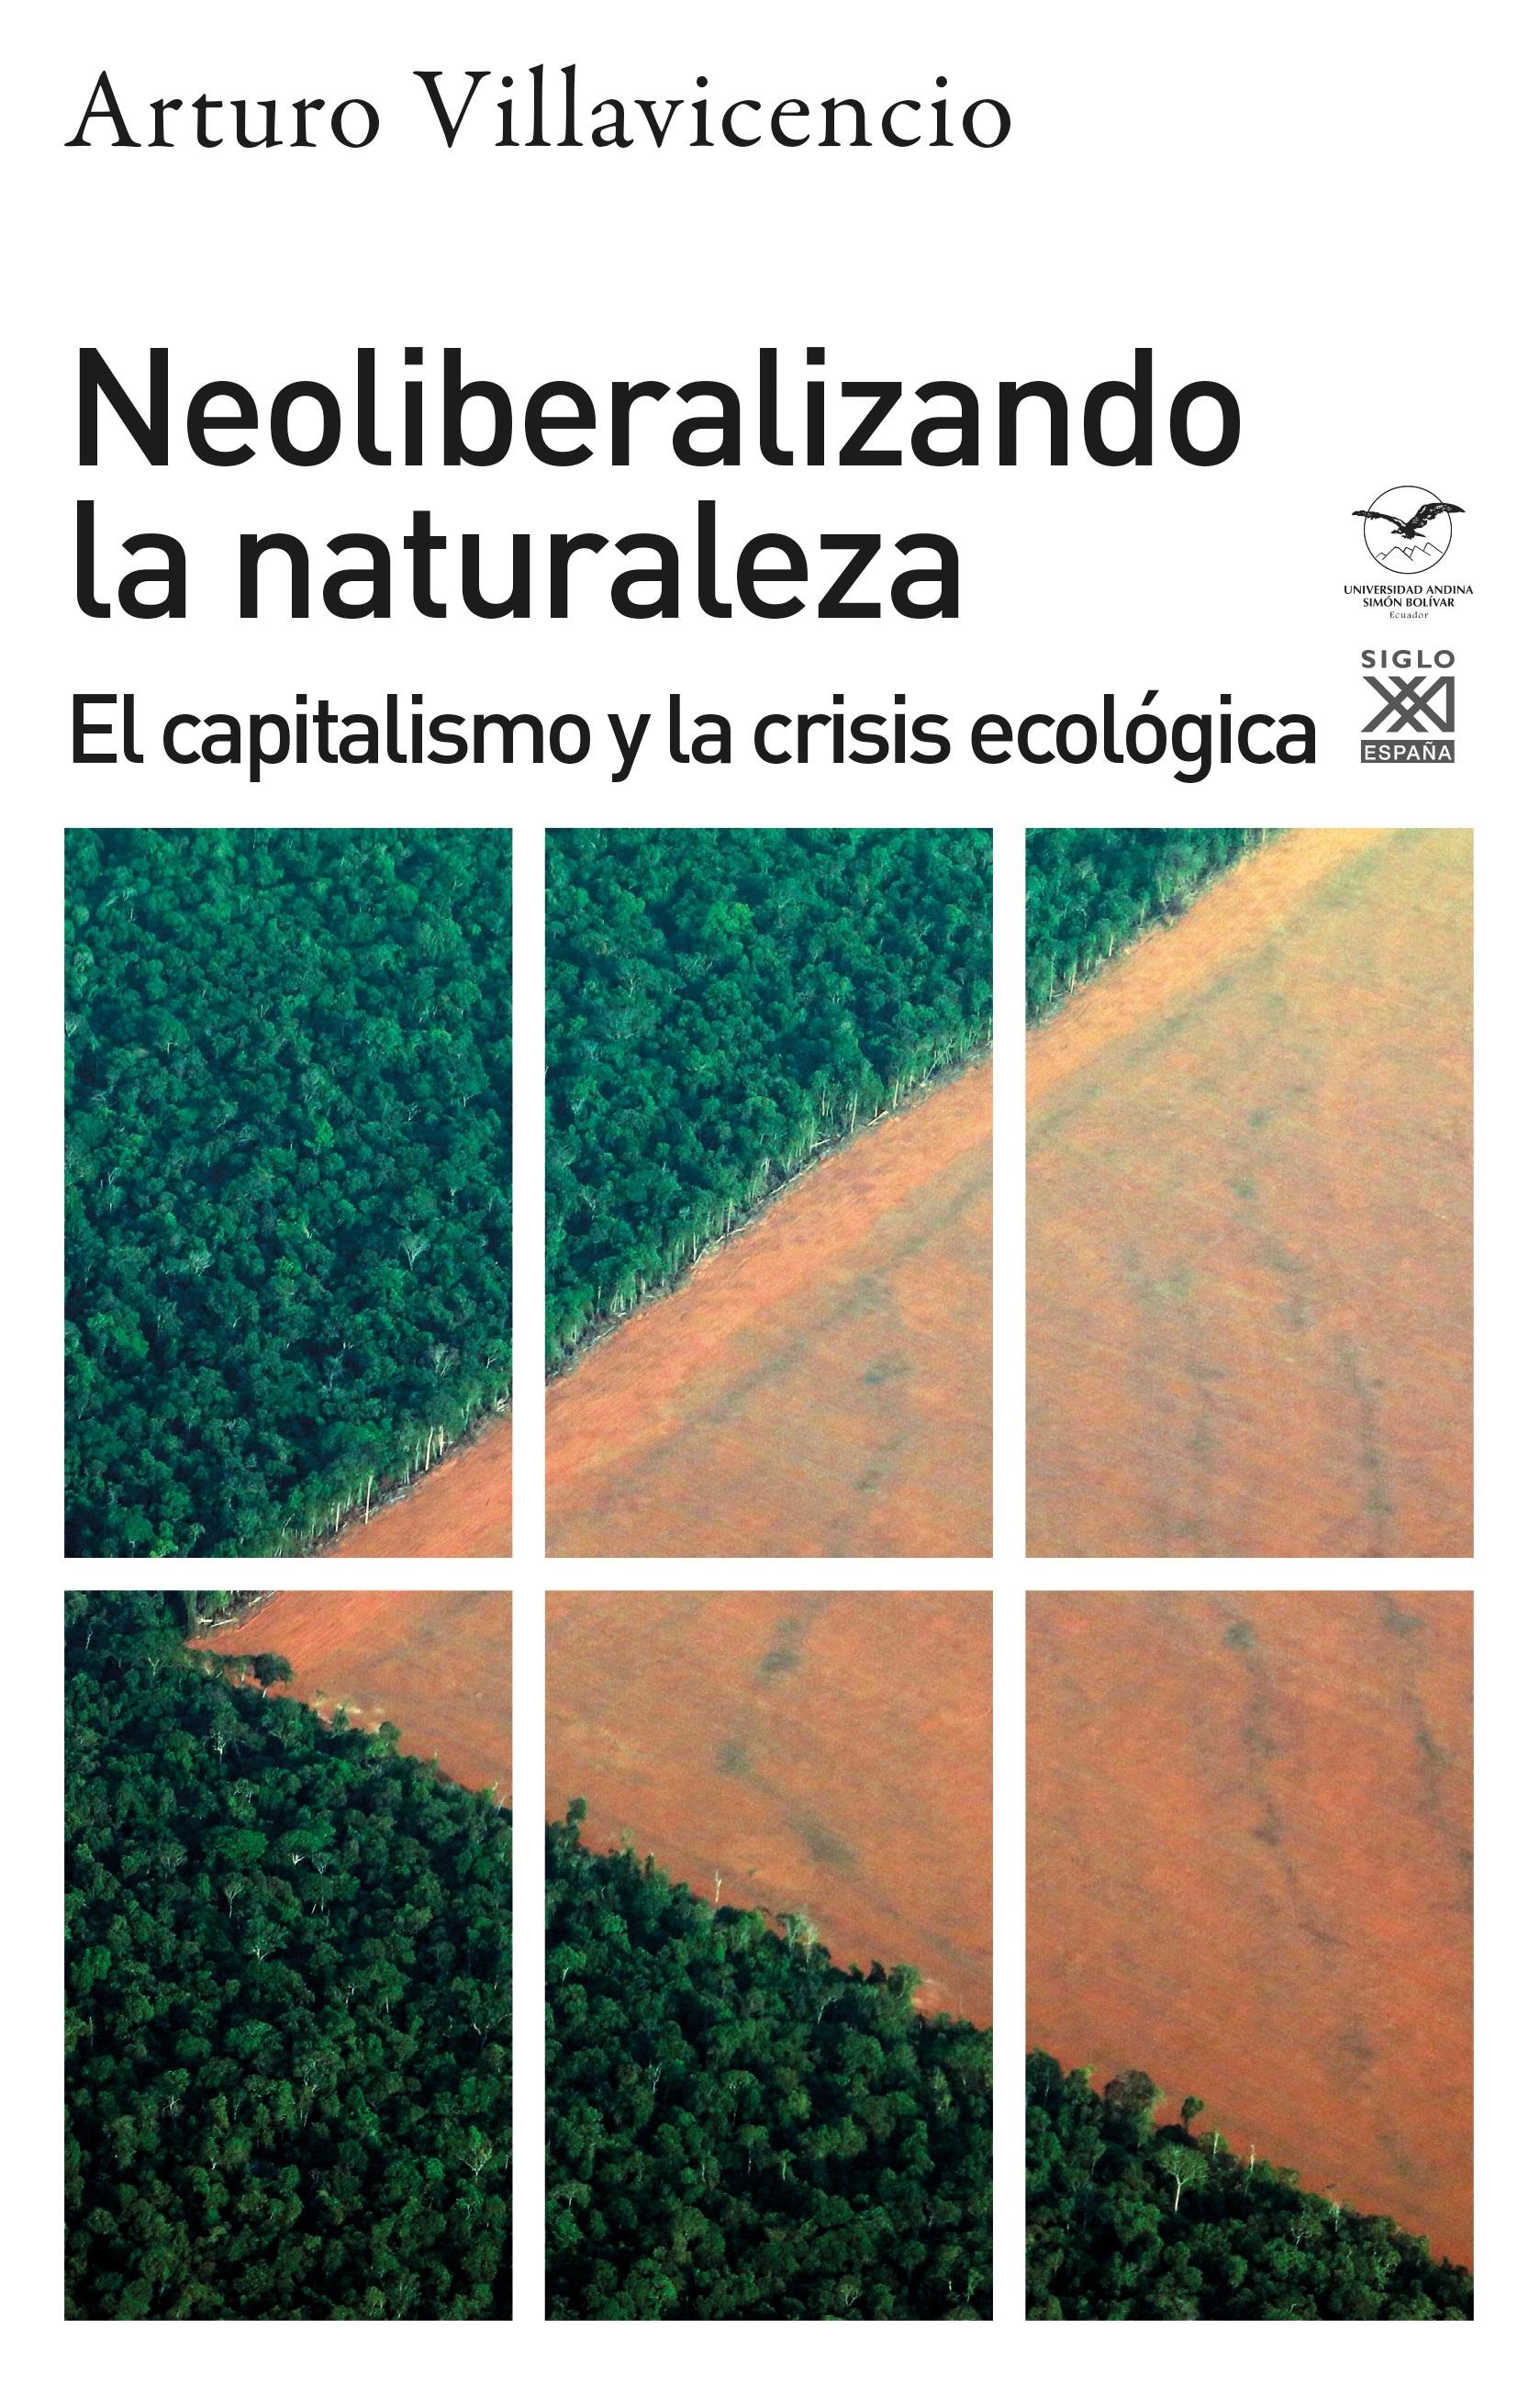 Neoliberalizando la naturaleza "El capitalismo y la crisis ecológica"